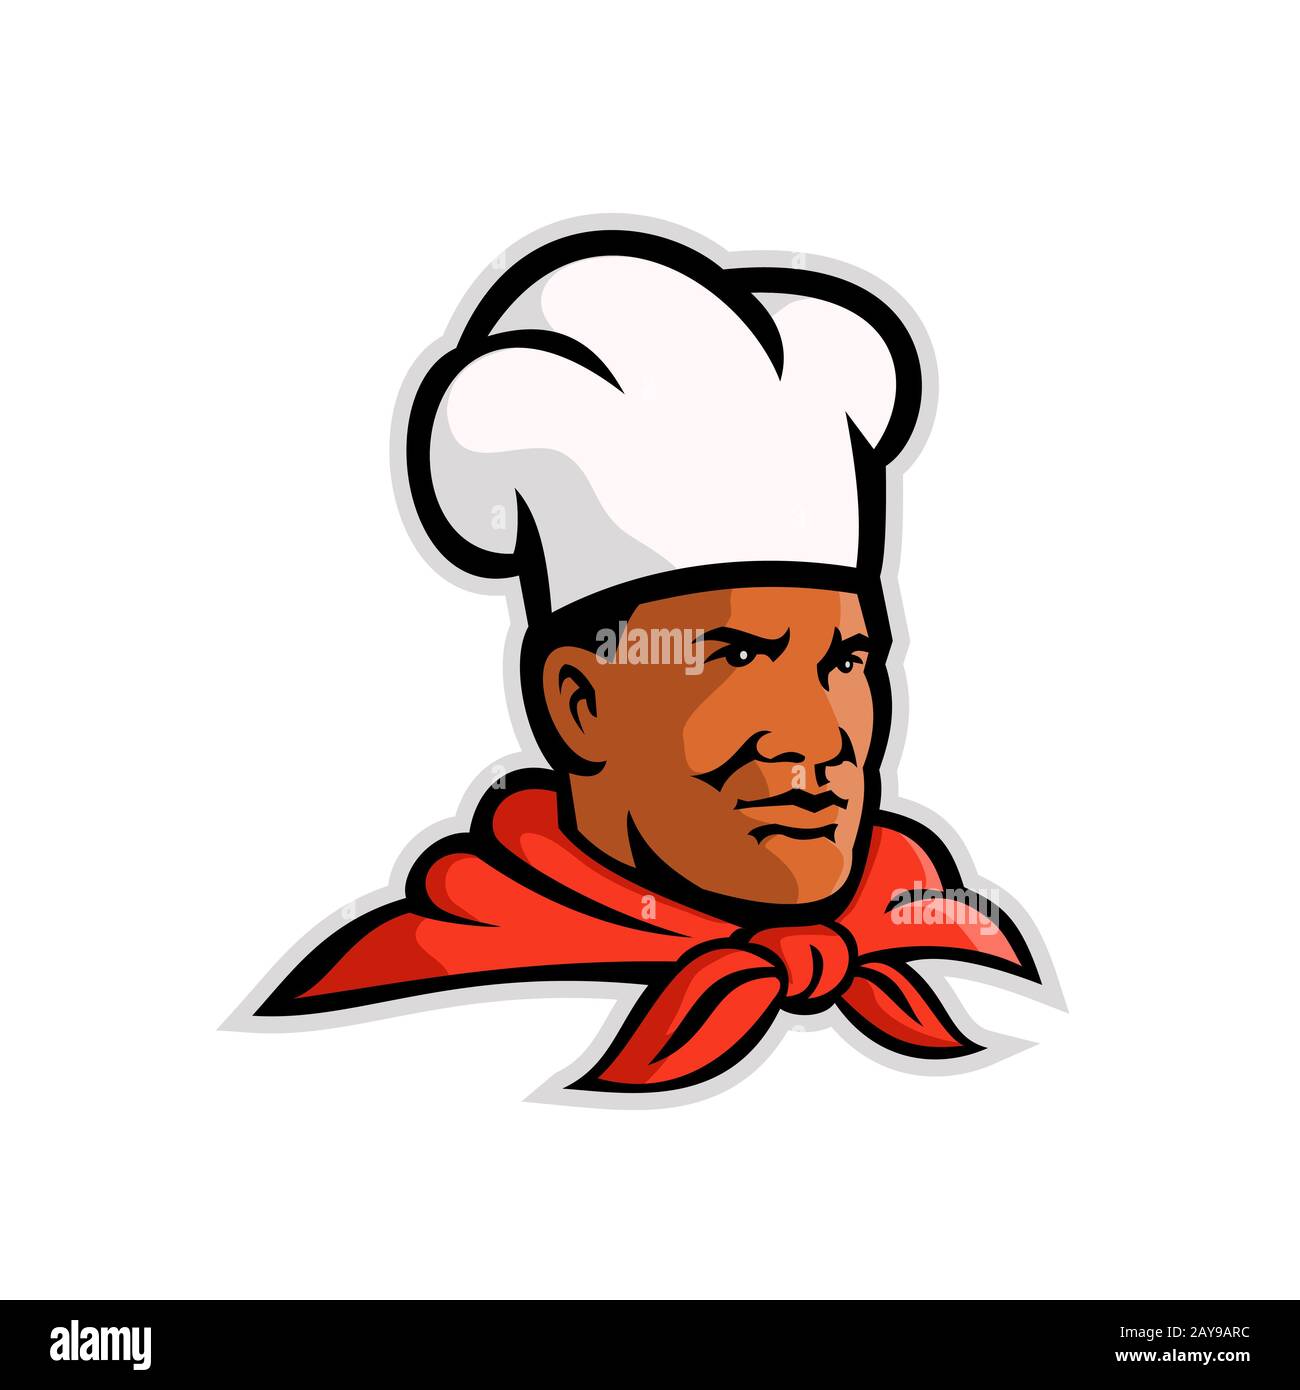 African American Chef Baker Mascot Stock Photo